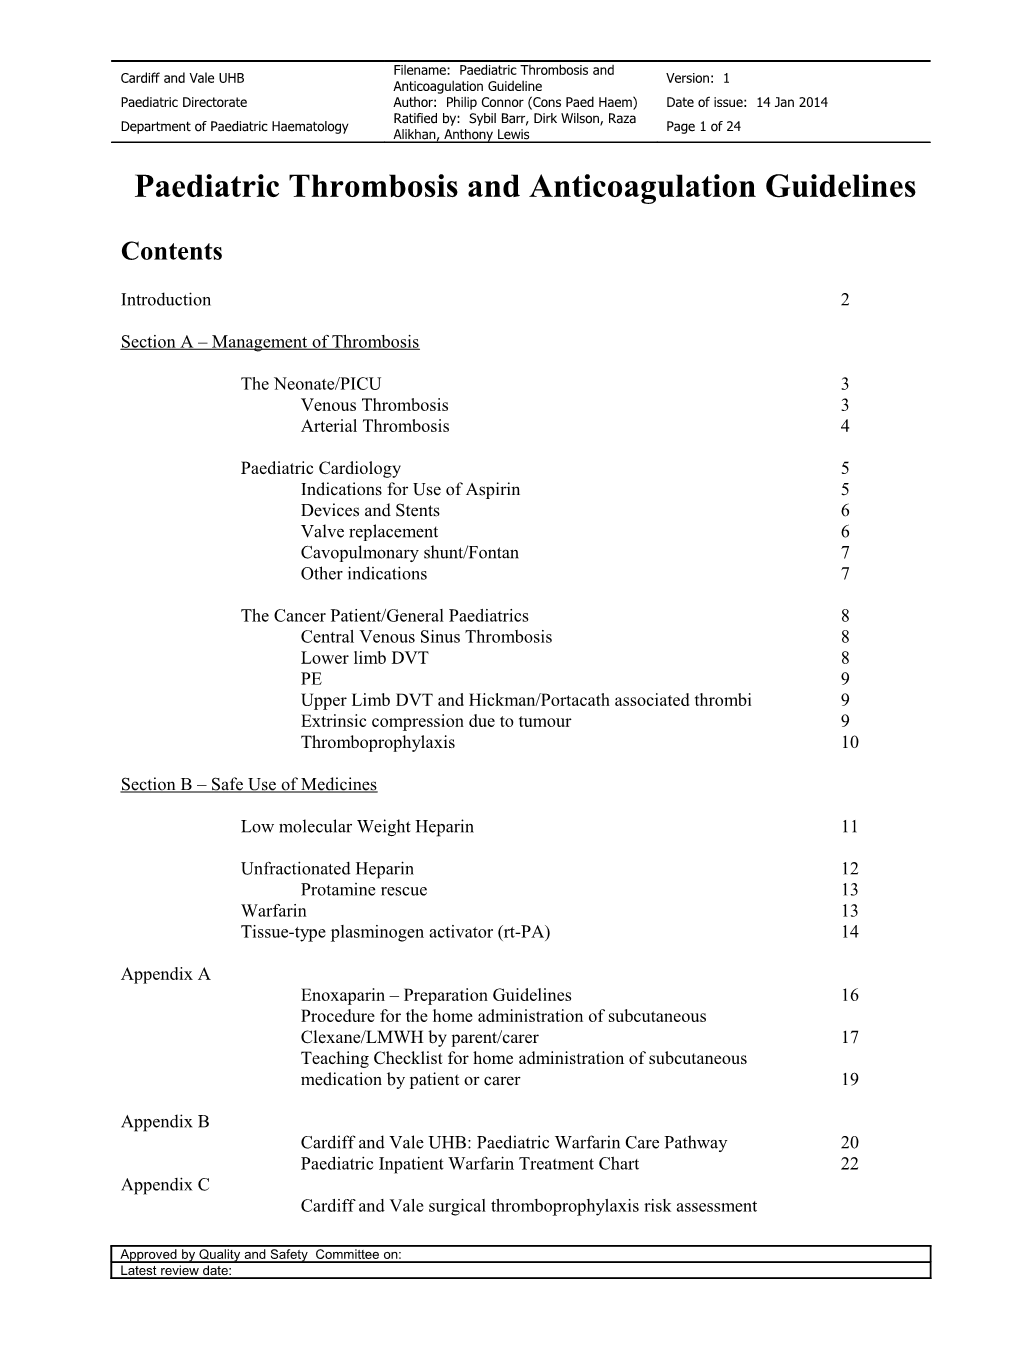 Paediatric Thrombosis and Anticoagulation Guidelines